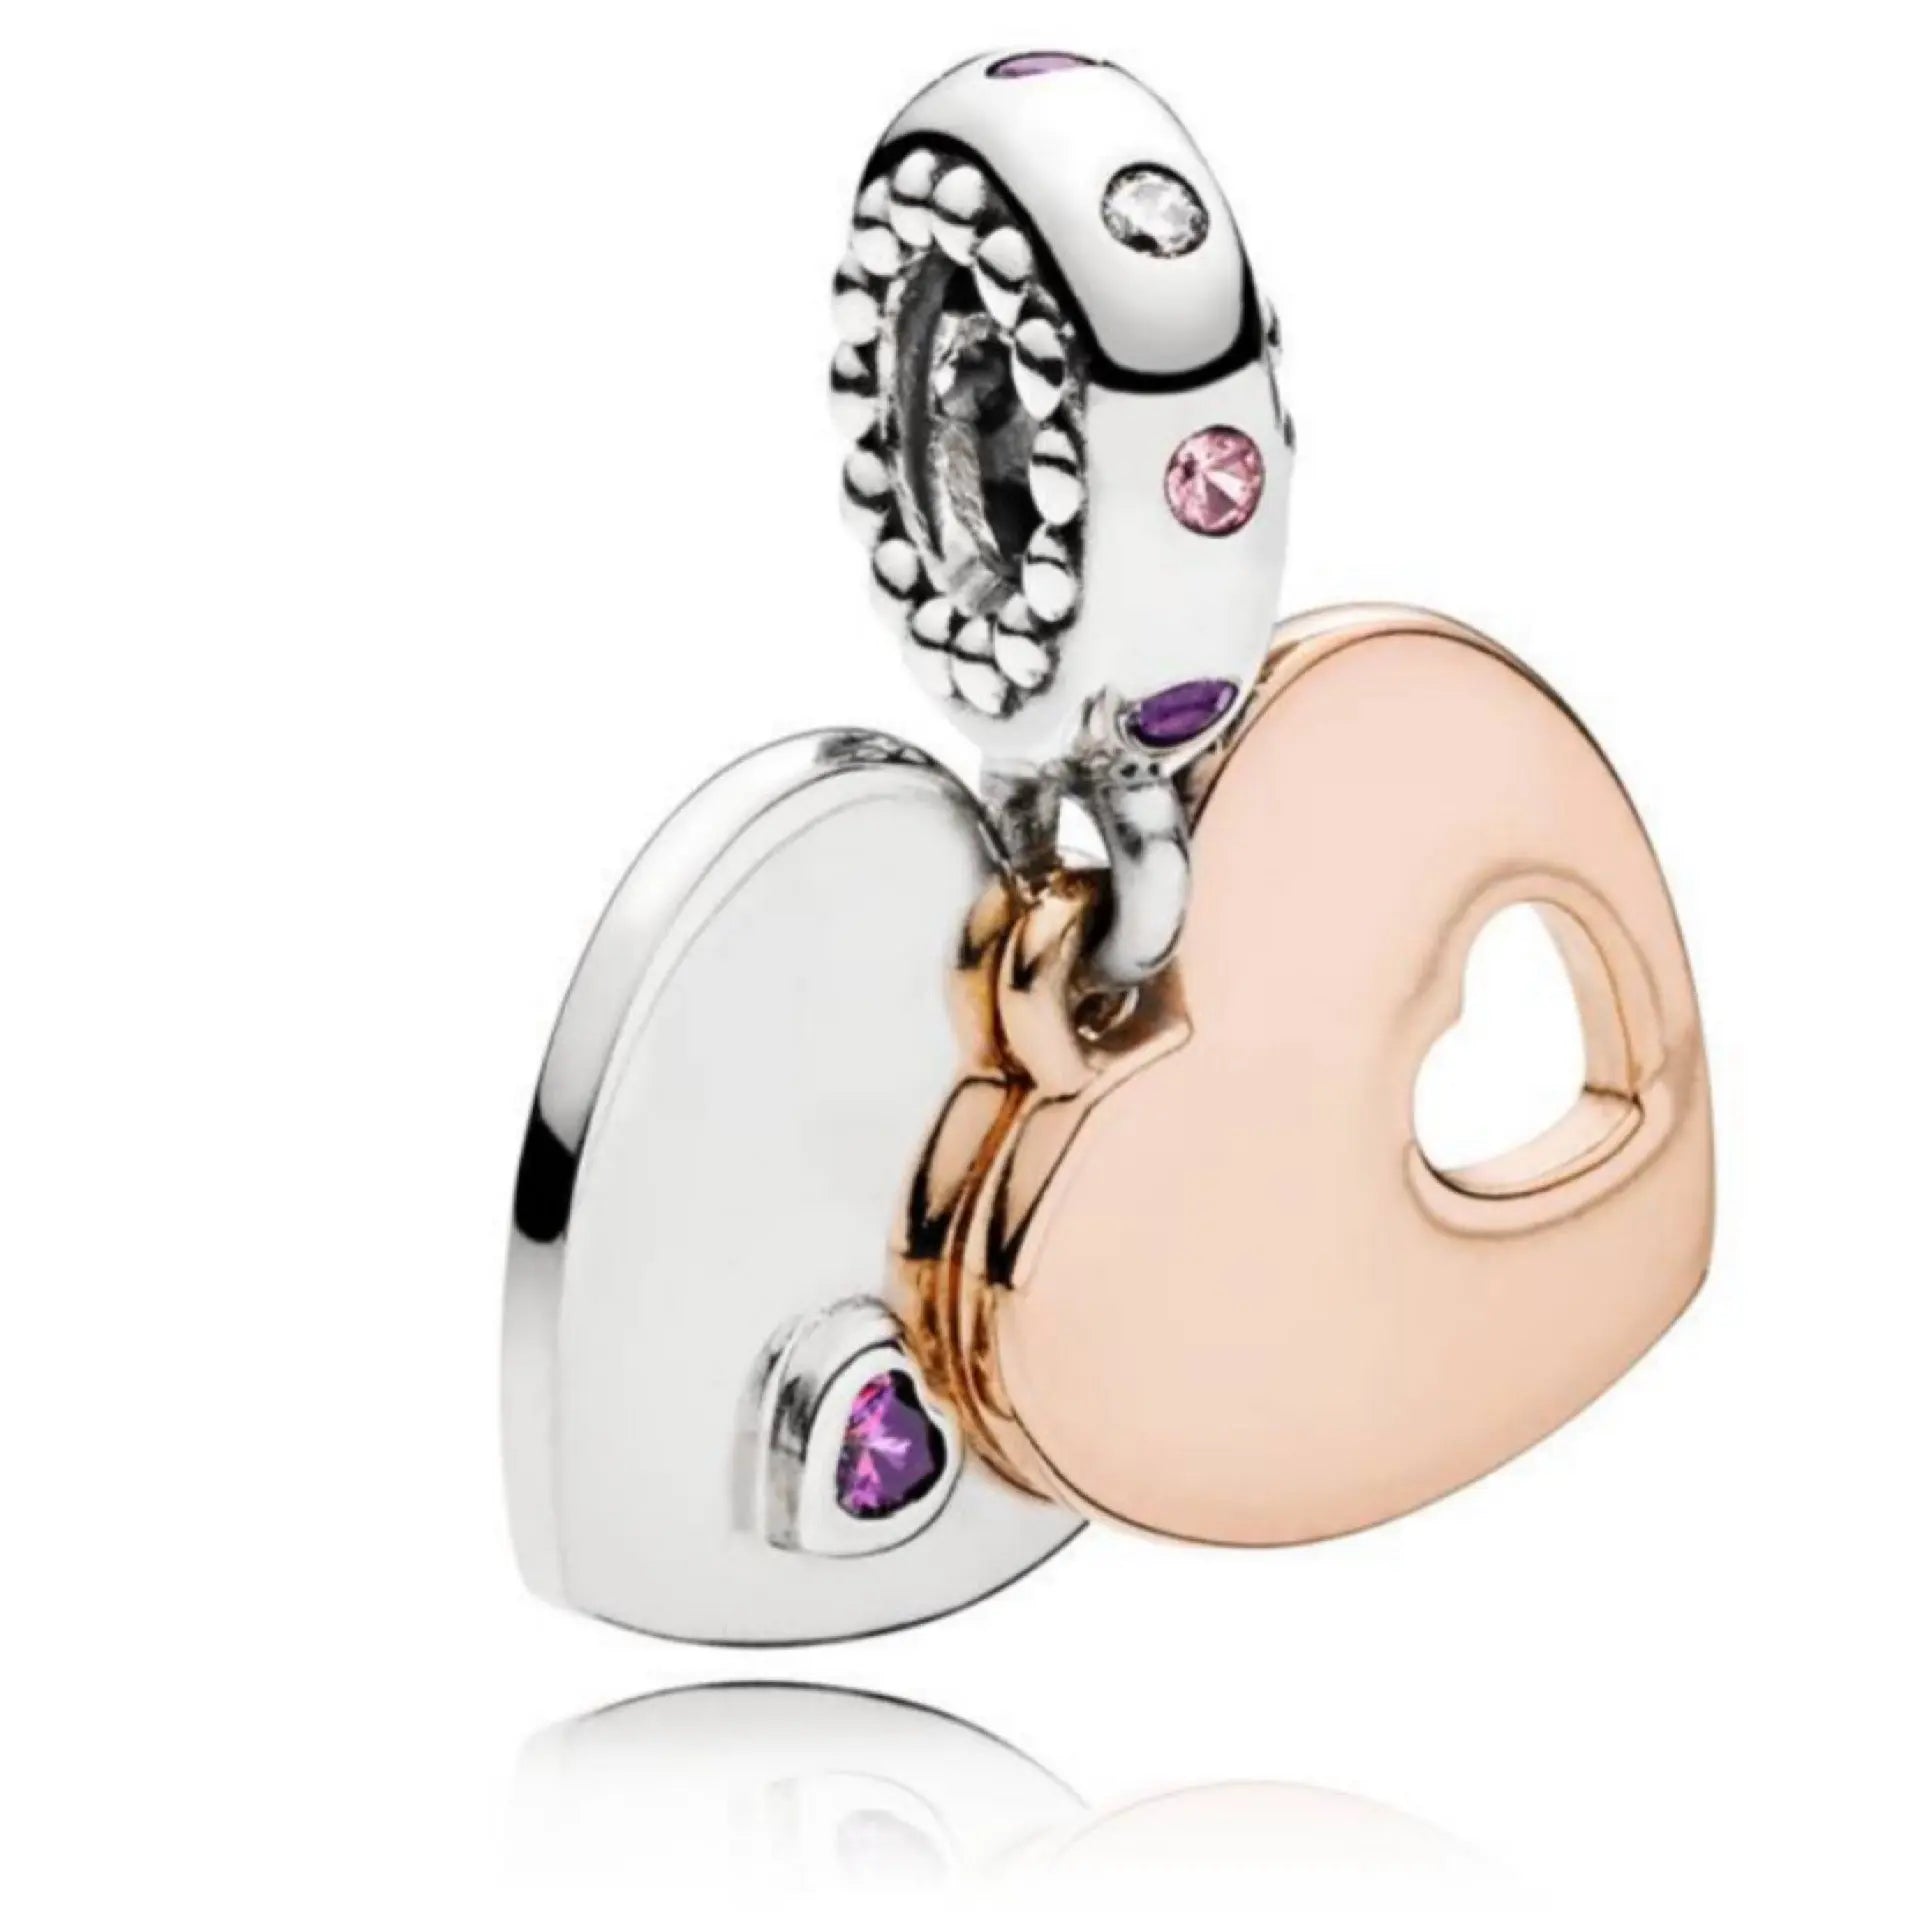 Pandora Part of my Heart Charm - Danson Jewelers Silver Jewelry 